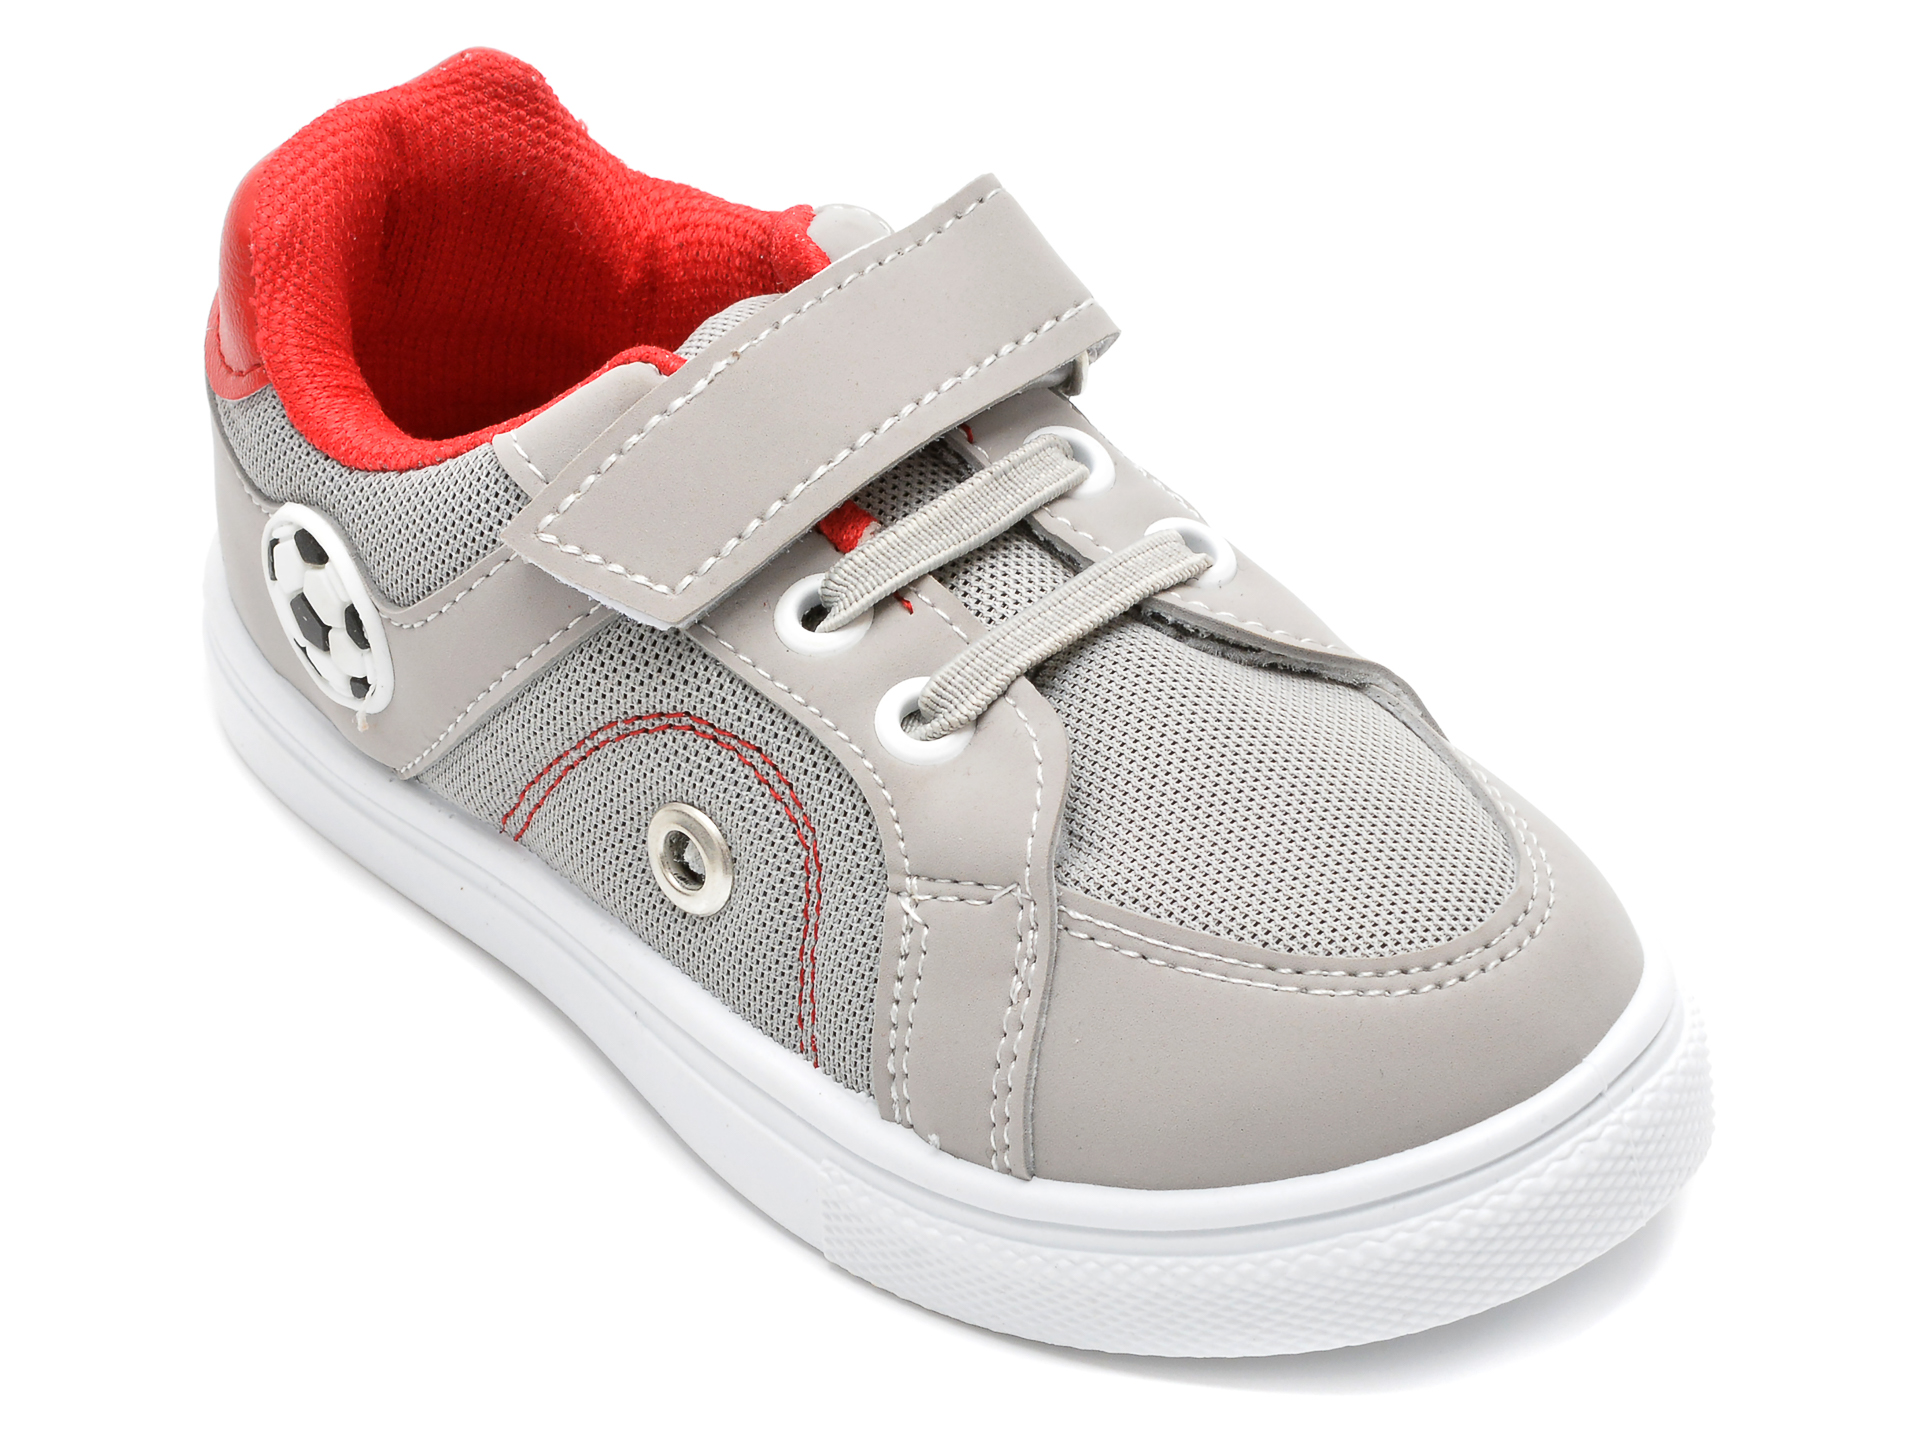 Pantofi sport POLARIS gri, 520138, din material textil si piele ecologica /copii/incaltaminte